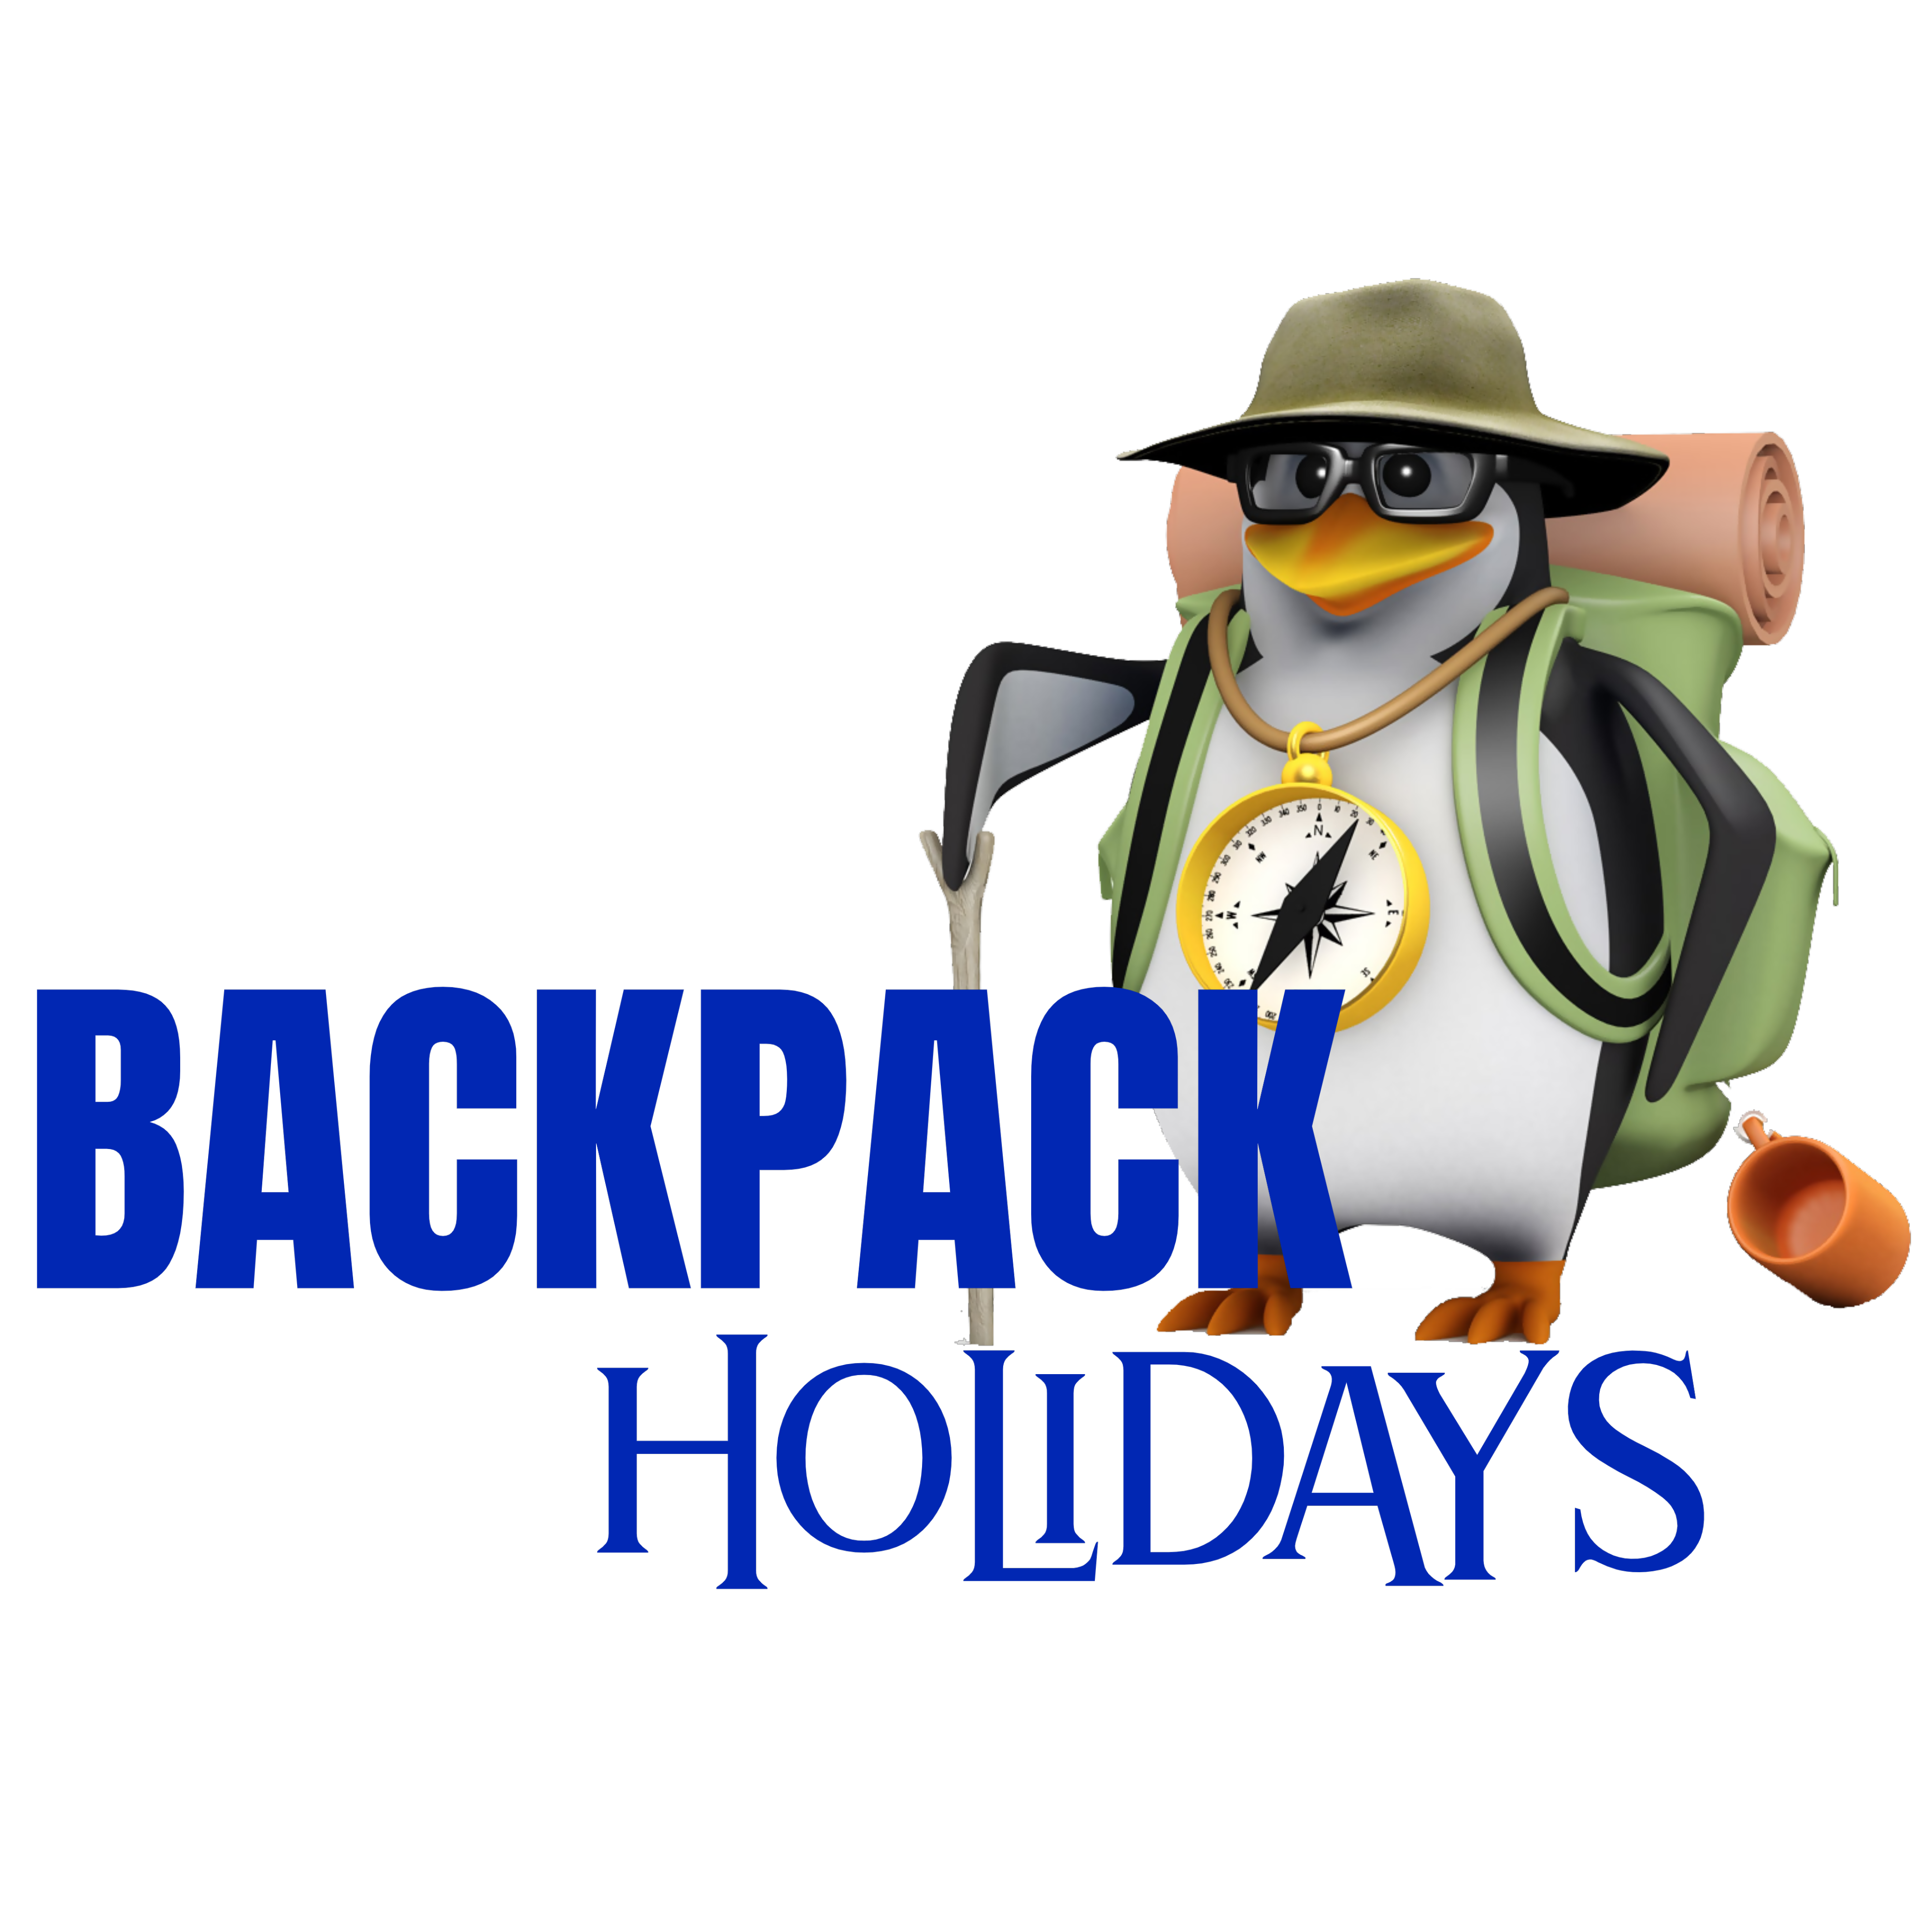 Backpack Holidays